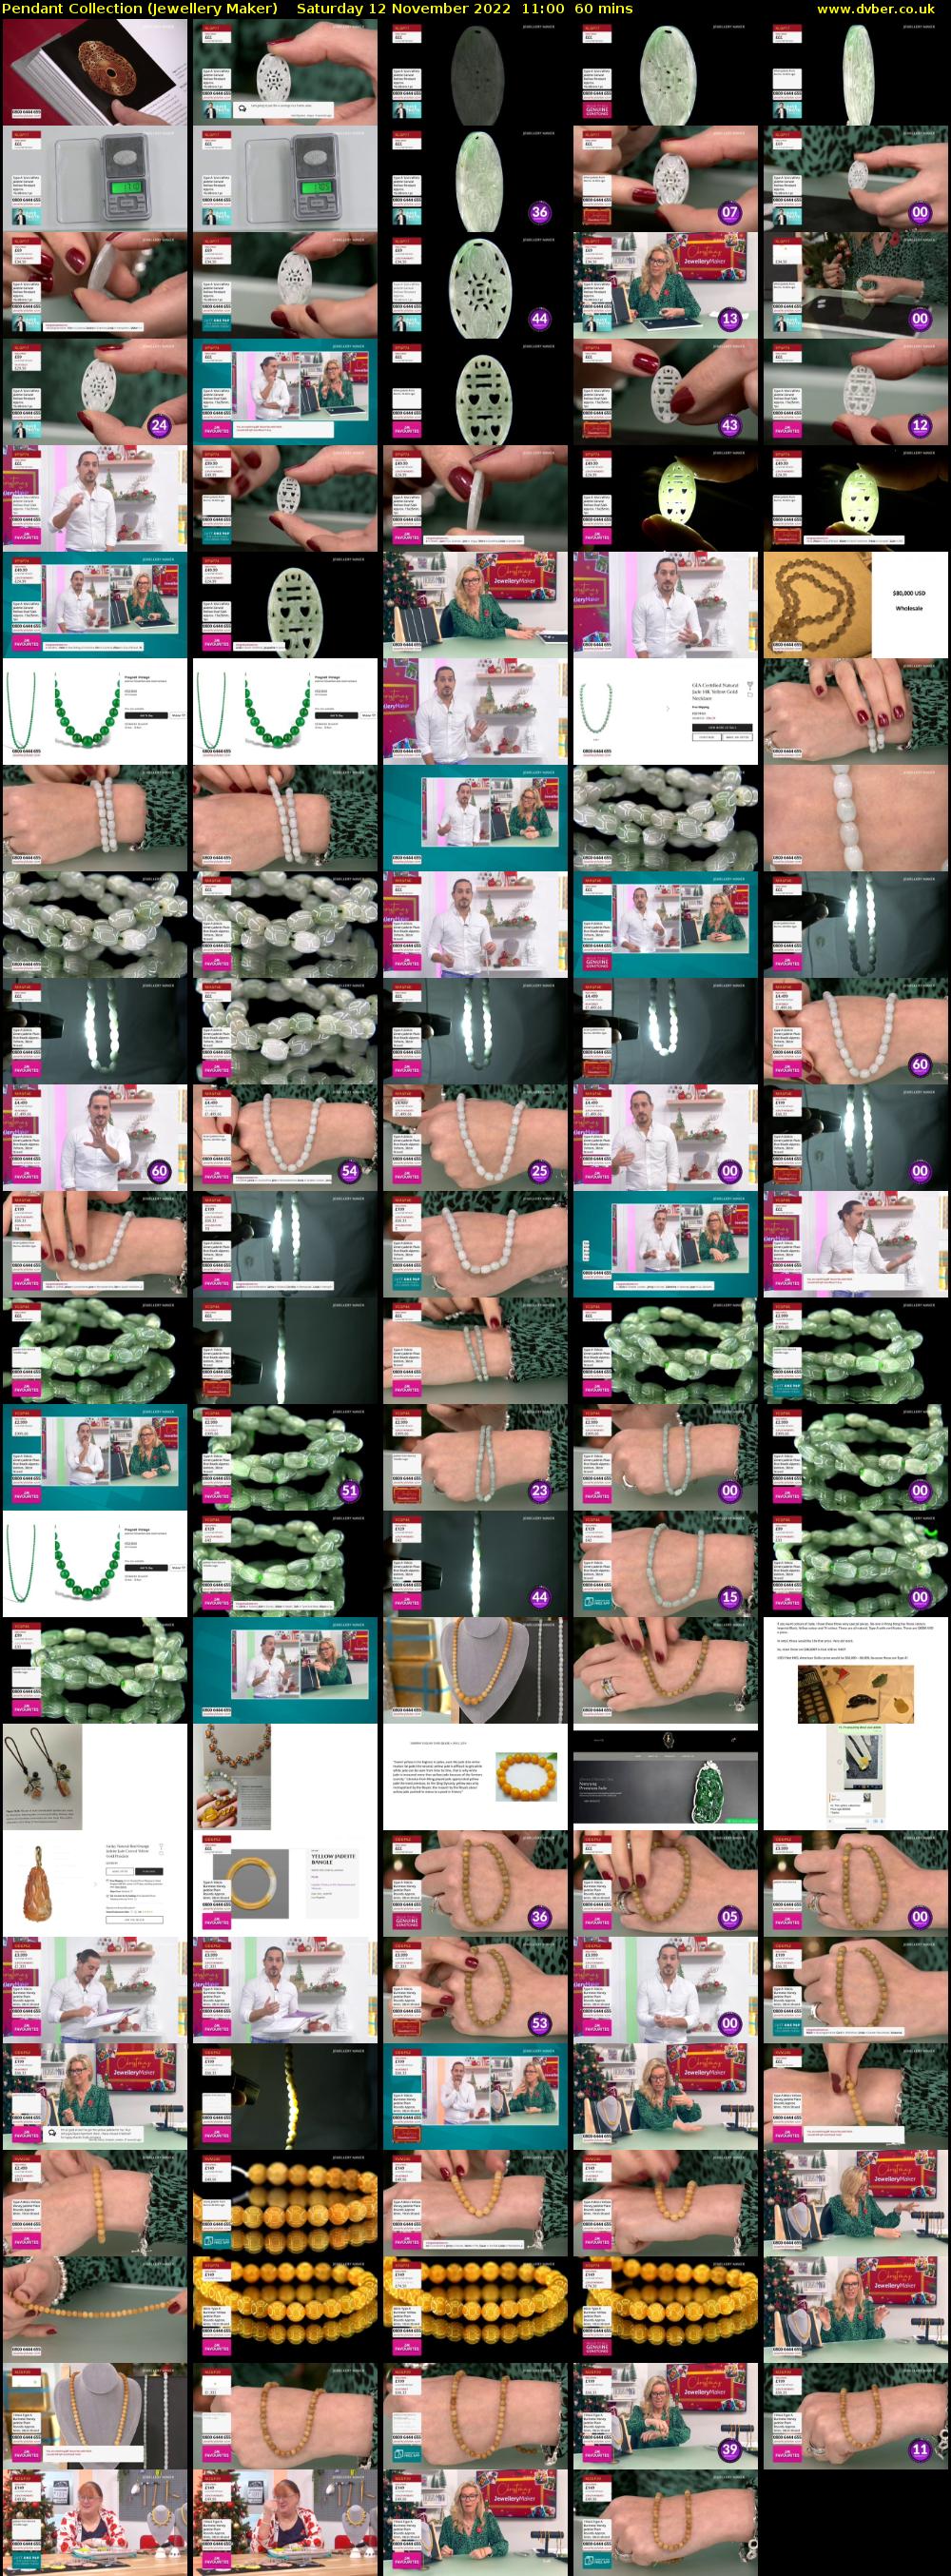 Pendant Collection (Jewellery Maker) Saturday 12 November 2022 11:00 - 12:00